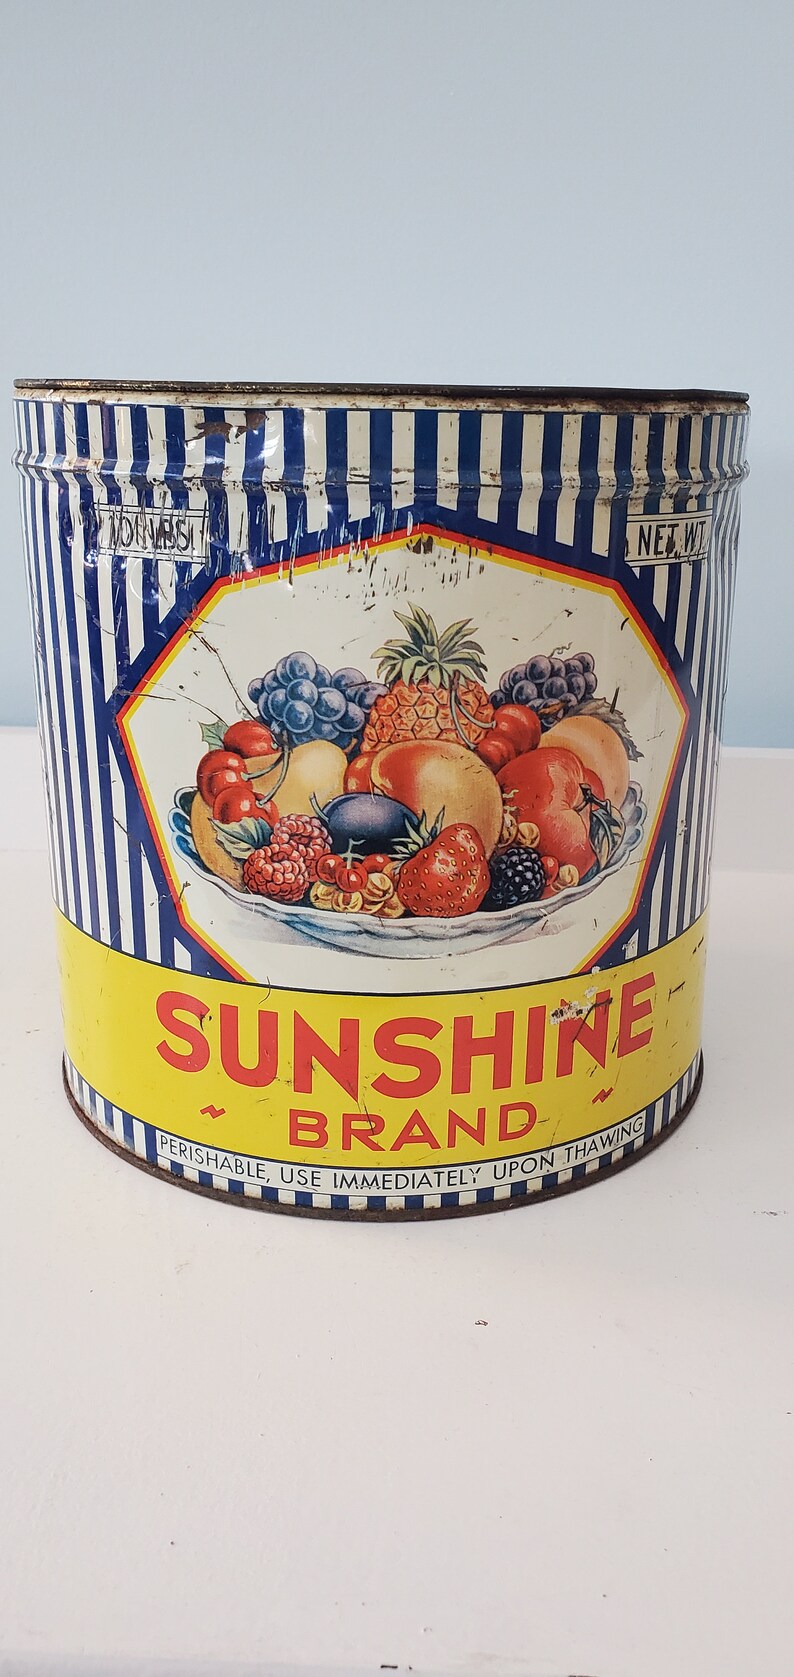 1950'S Sunshine Brand Fruits Vintage Advertising Tin Can, Sunshine Packing Corporation of Pennsylvania image 2